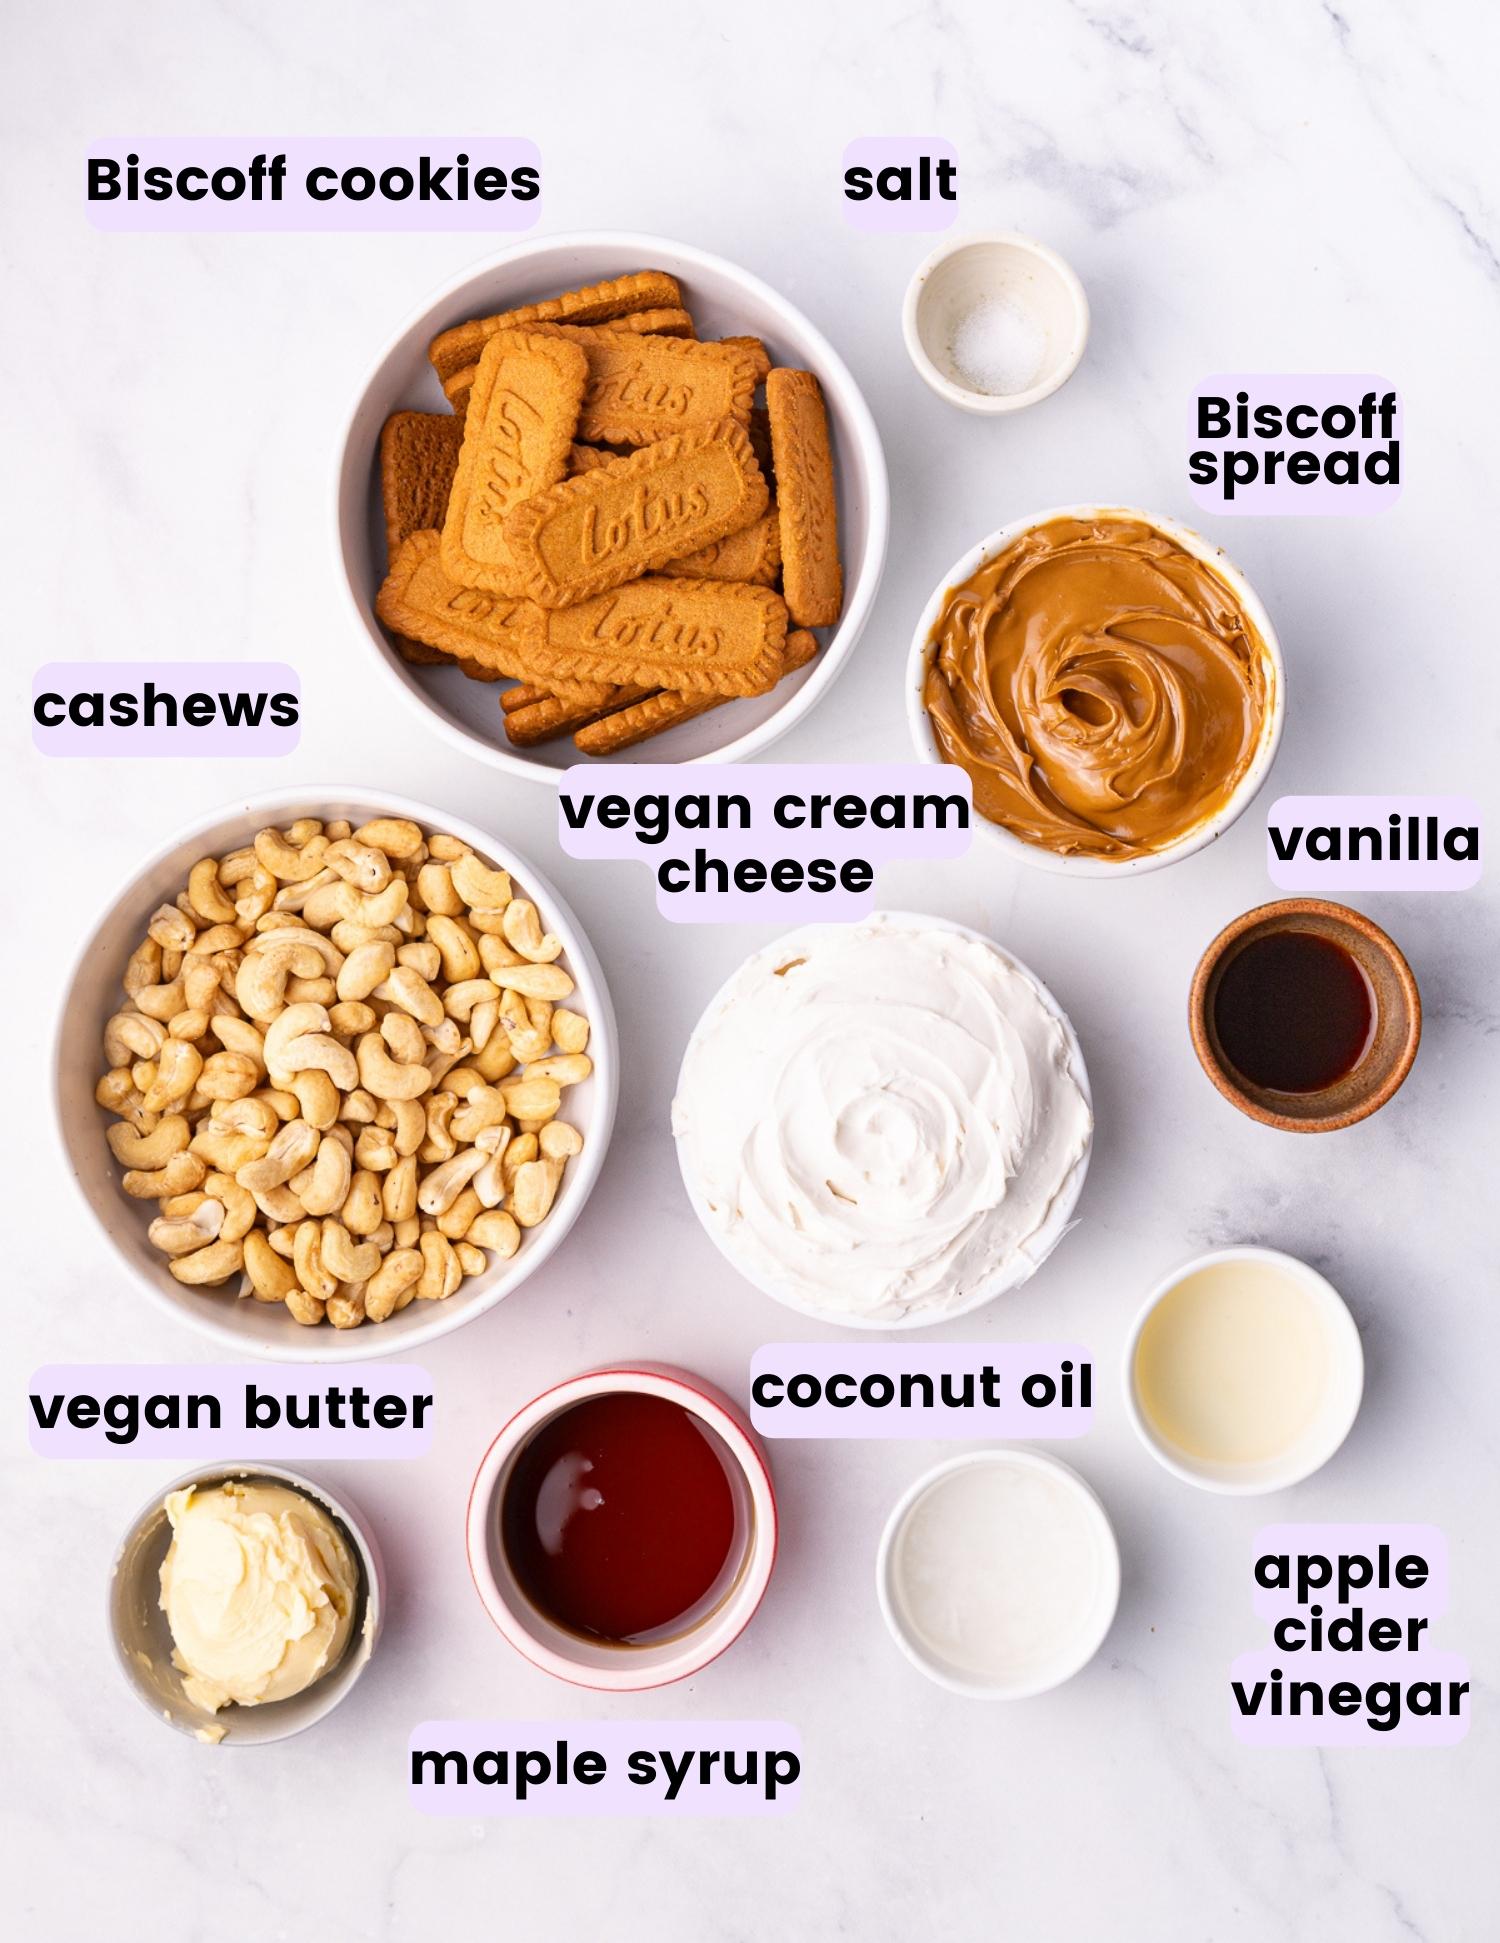 Biscoff cookies, salt, Biscoff spread, cashews, vegan cream cheese, vanilla, vegan butter, maple syrup, coconut oil, apple cider vinegar. 